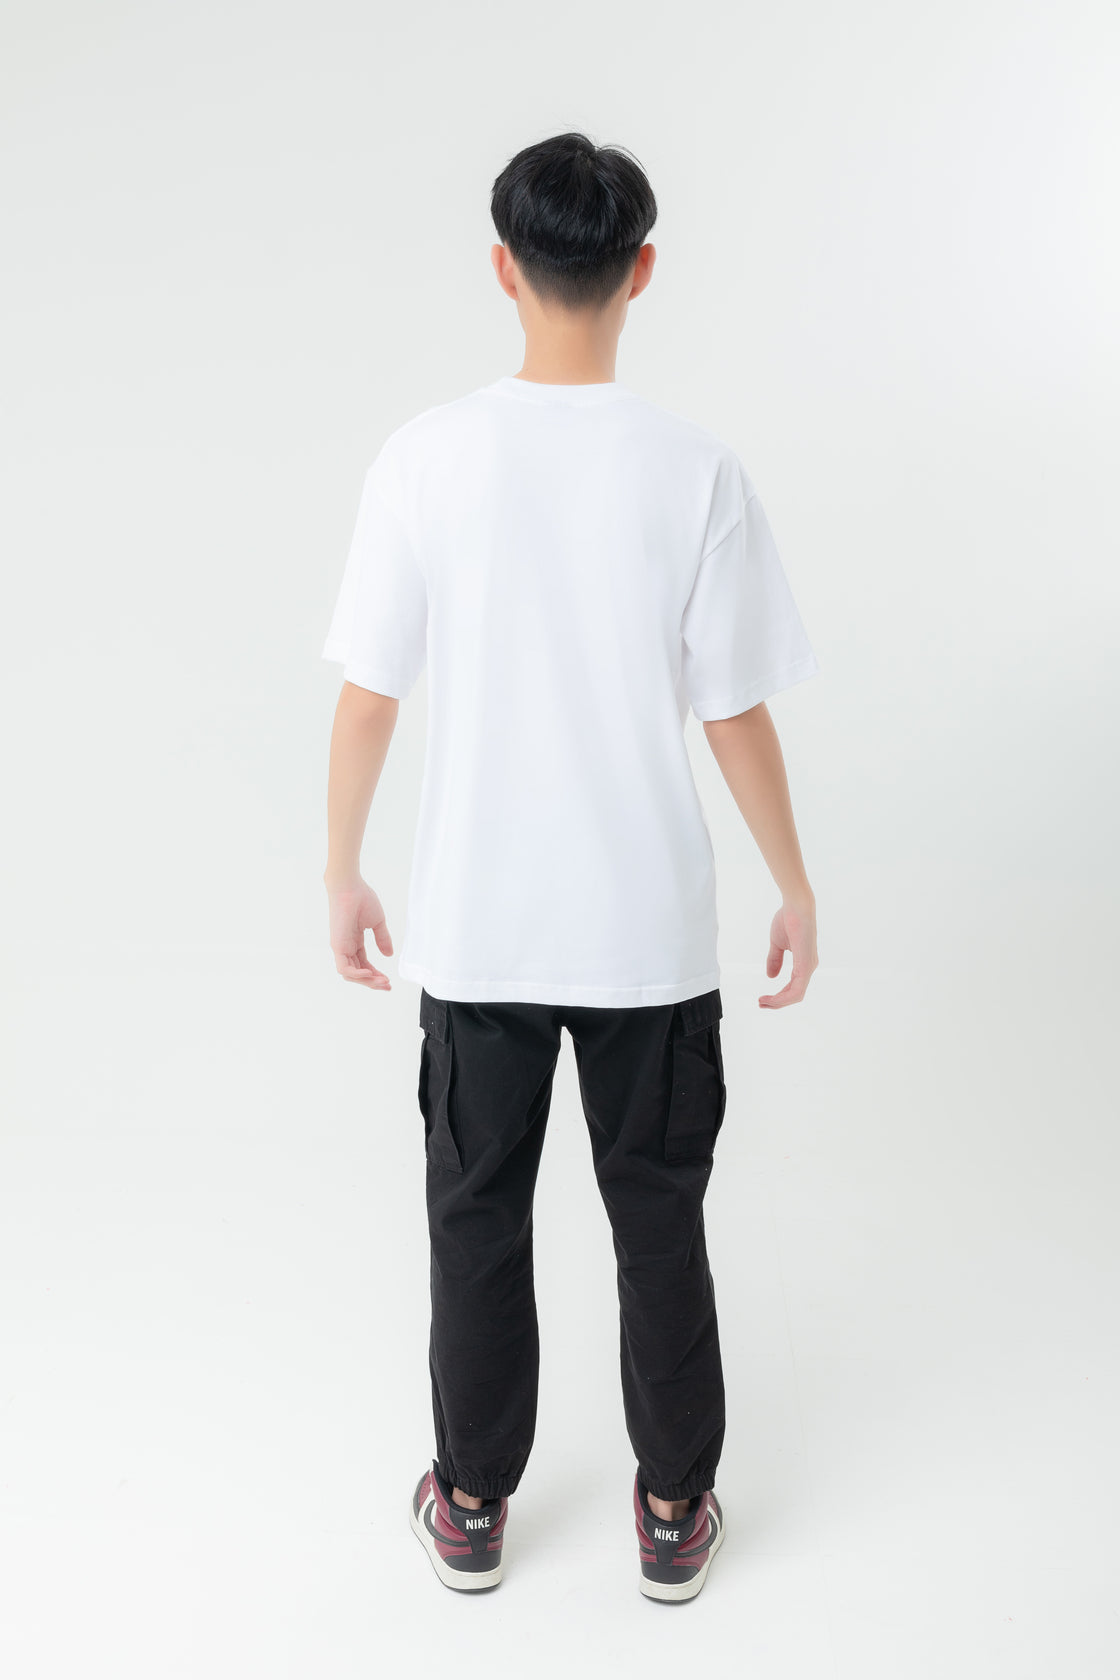 Hub Malaysia streetwear brand - Streetwear Malaysia Model Wearing "Caipe Diem" White